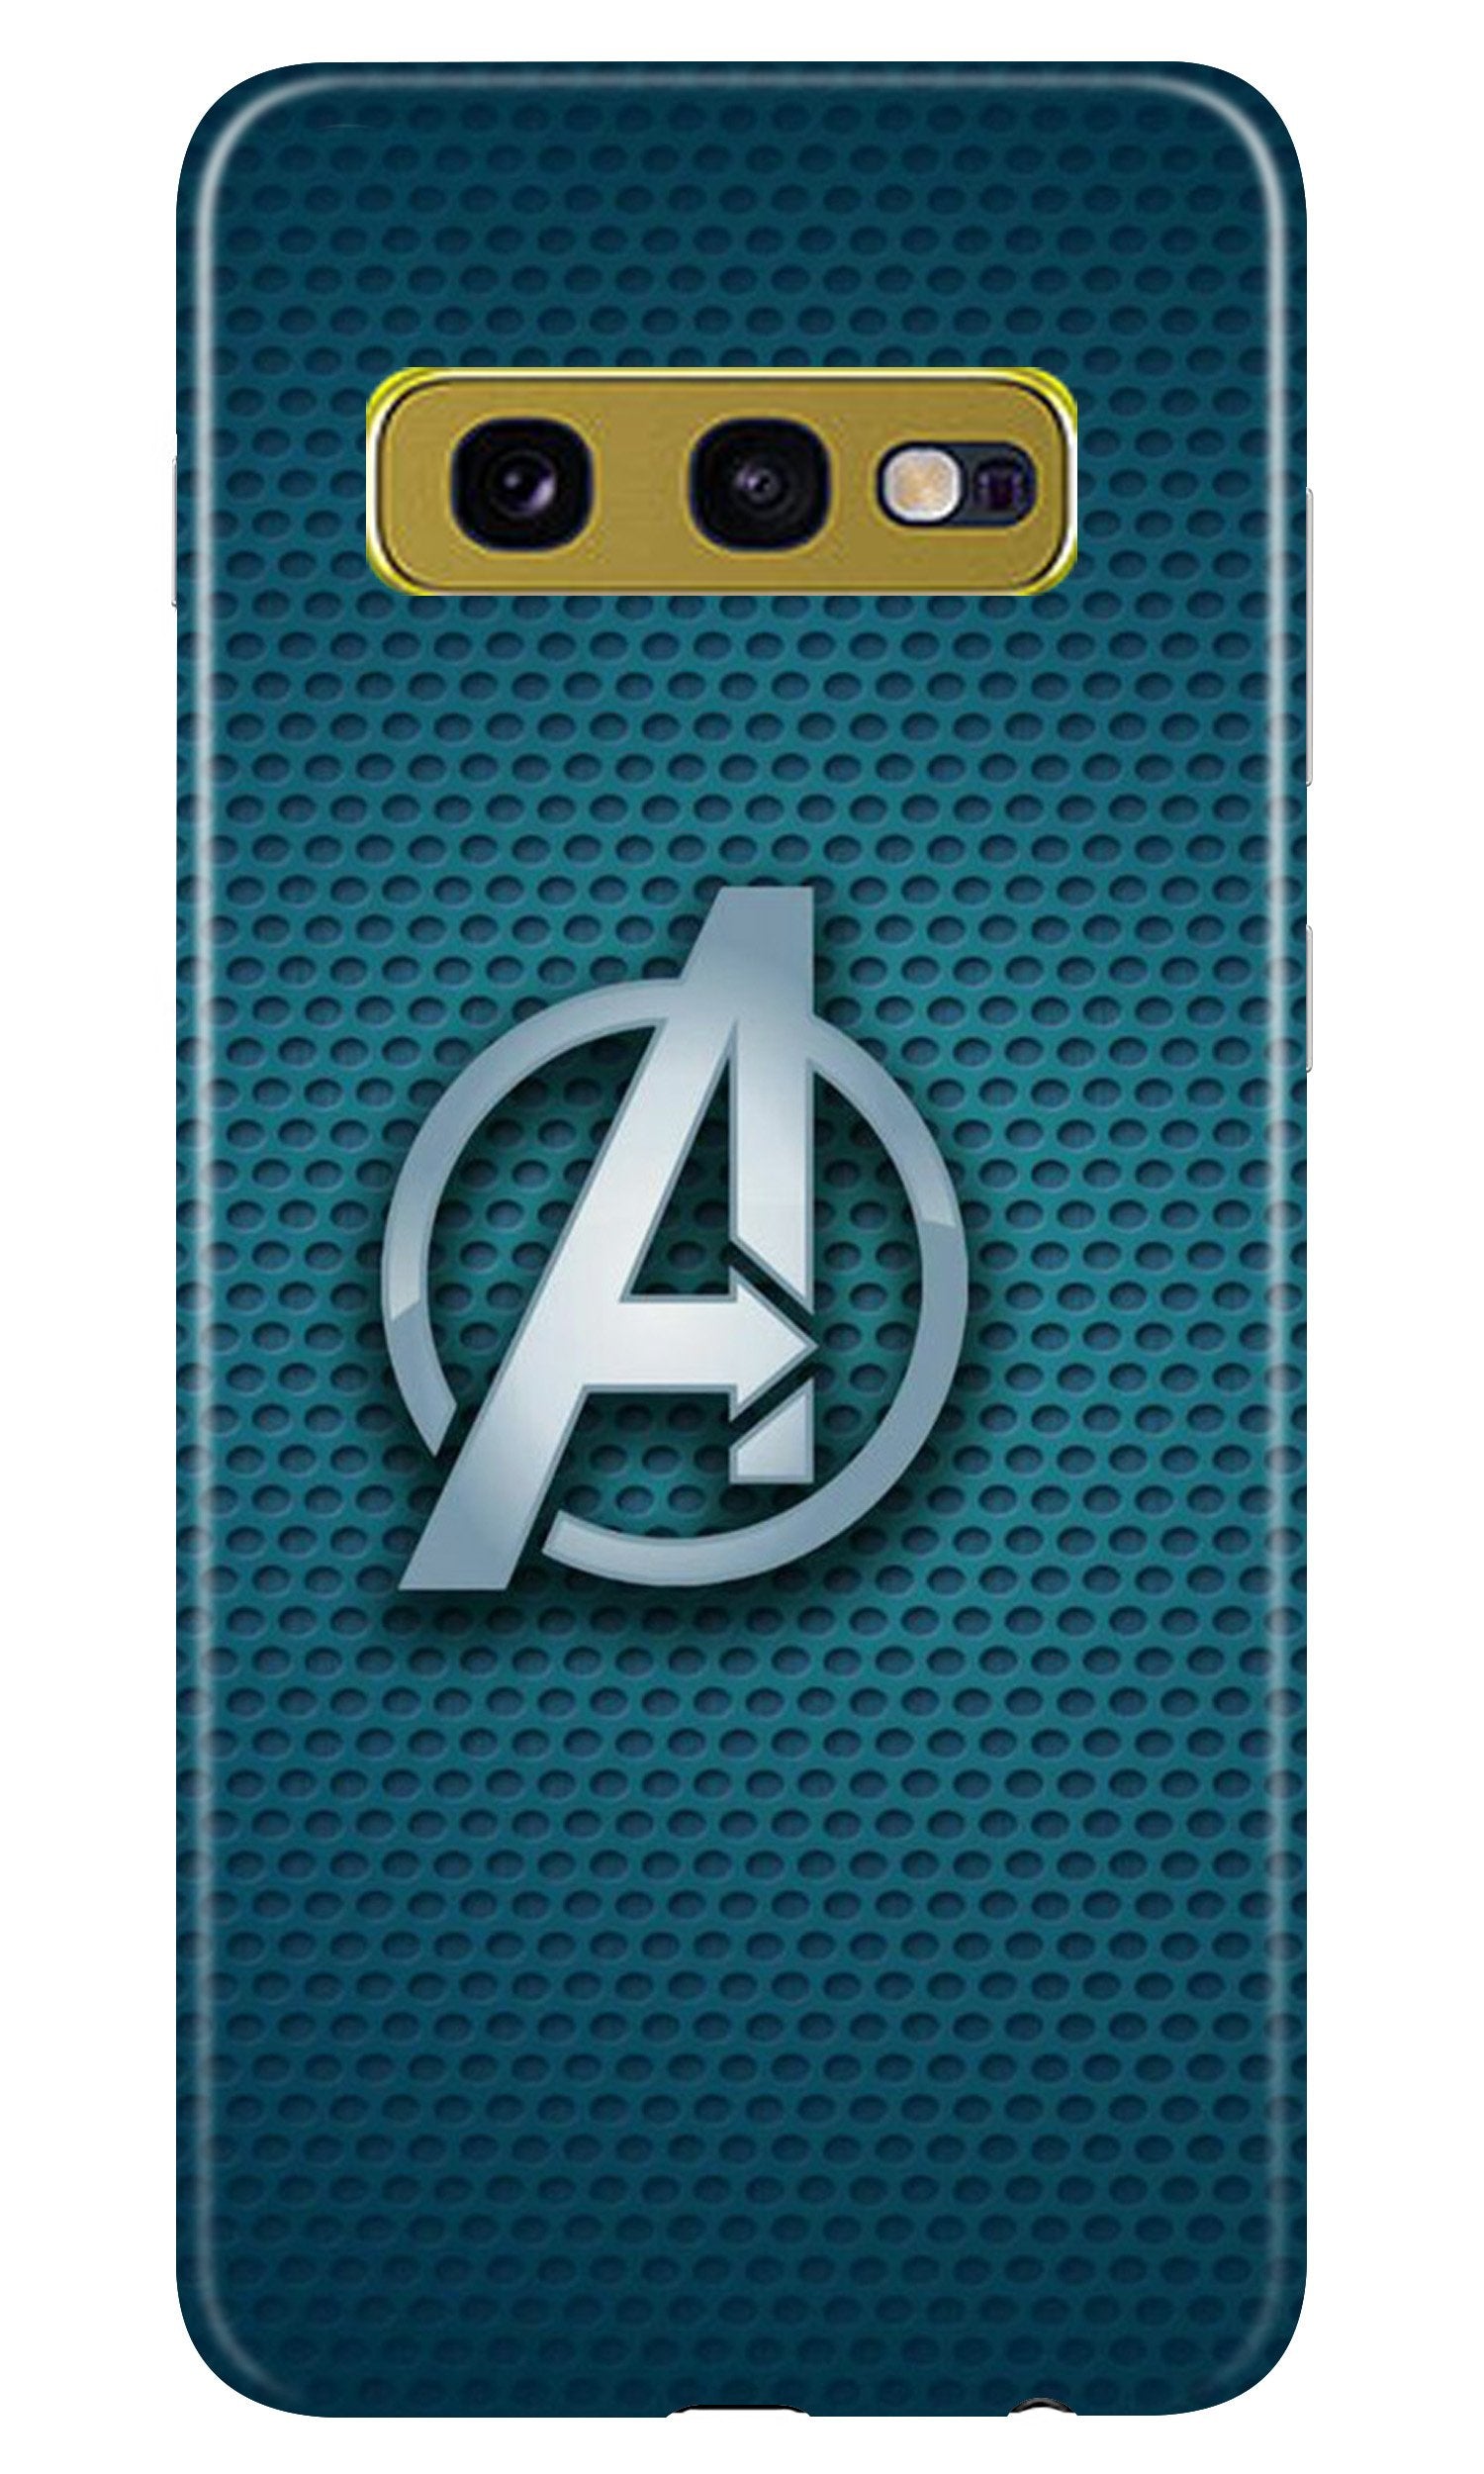 Avengers Case for Samsung Galaxy S10E (Design No. 246)